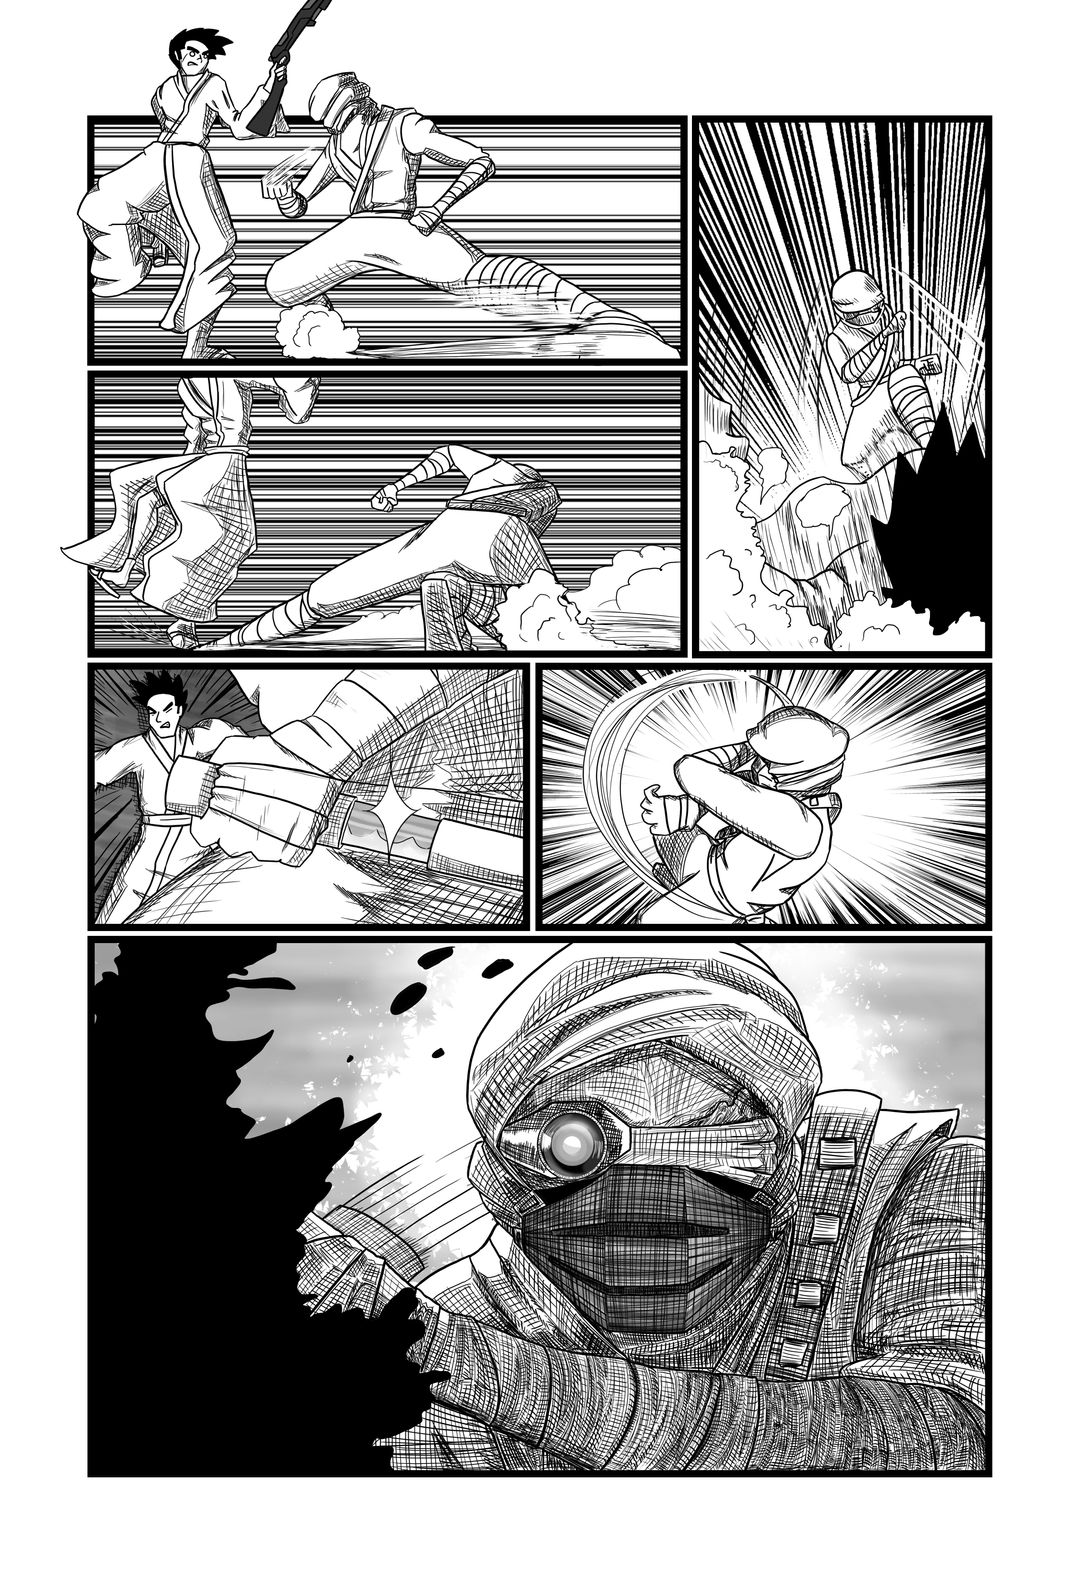 Shotgun Samurai 15 panel 6